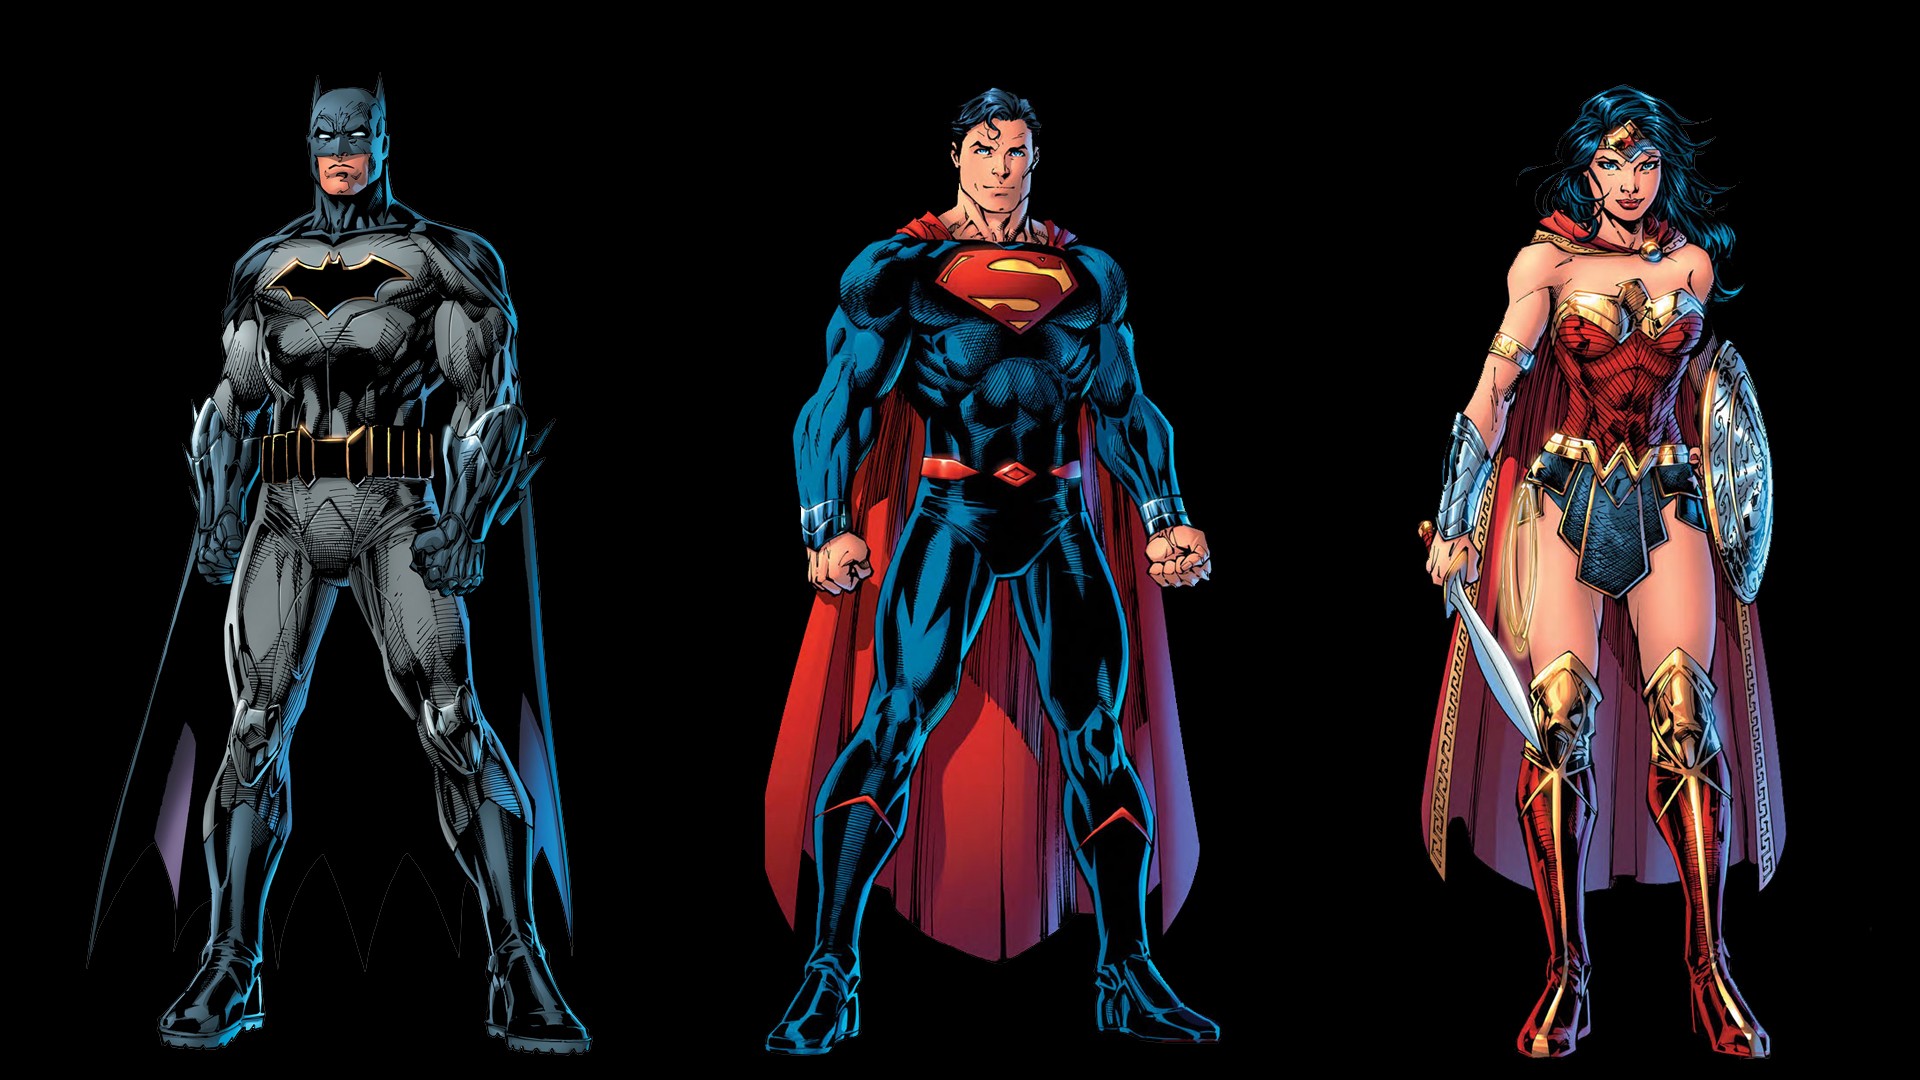 General 1920x1080 Superman Wonder Woman Batman DC Comics Rebirth black background superhero superheroines Justice League comic art muscles women with swords shield